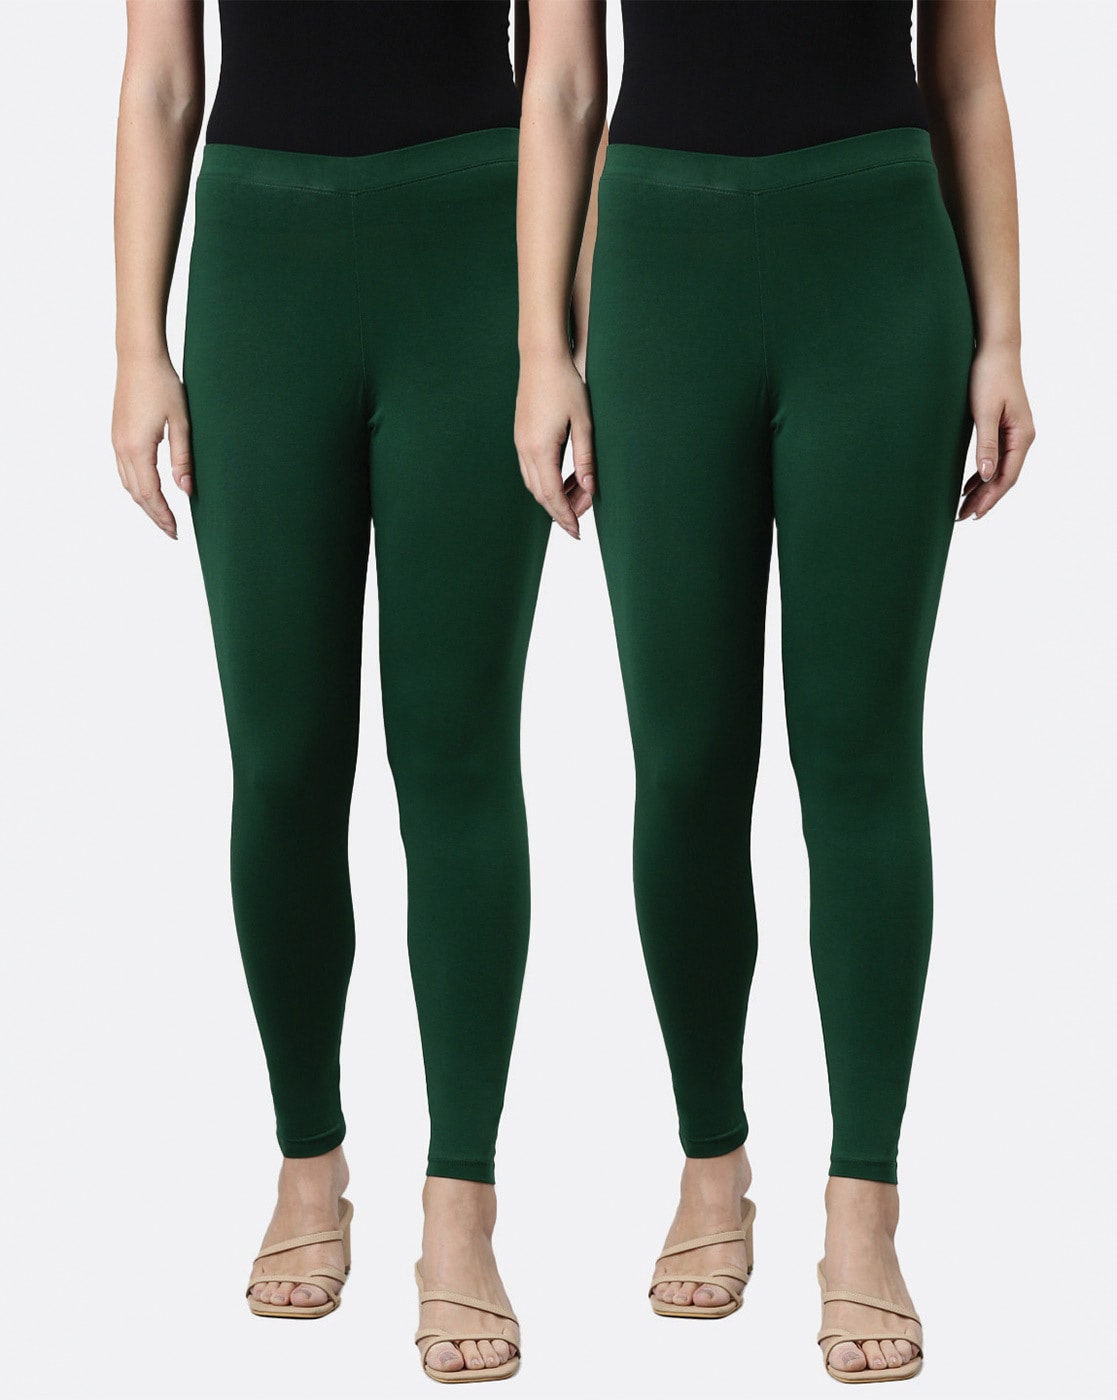 Buy Geetha Green Leggings for Women by BLISSCLUB Online | Ajio.com